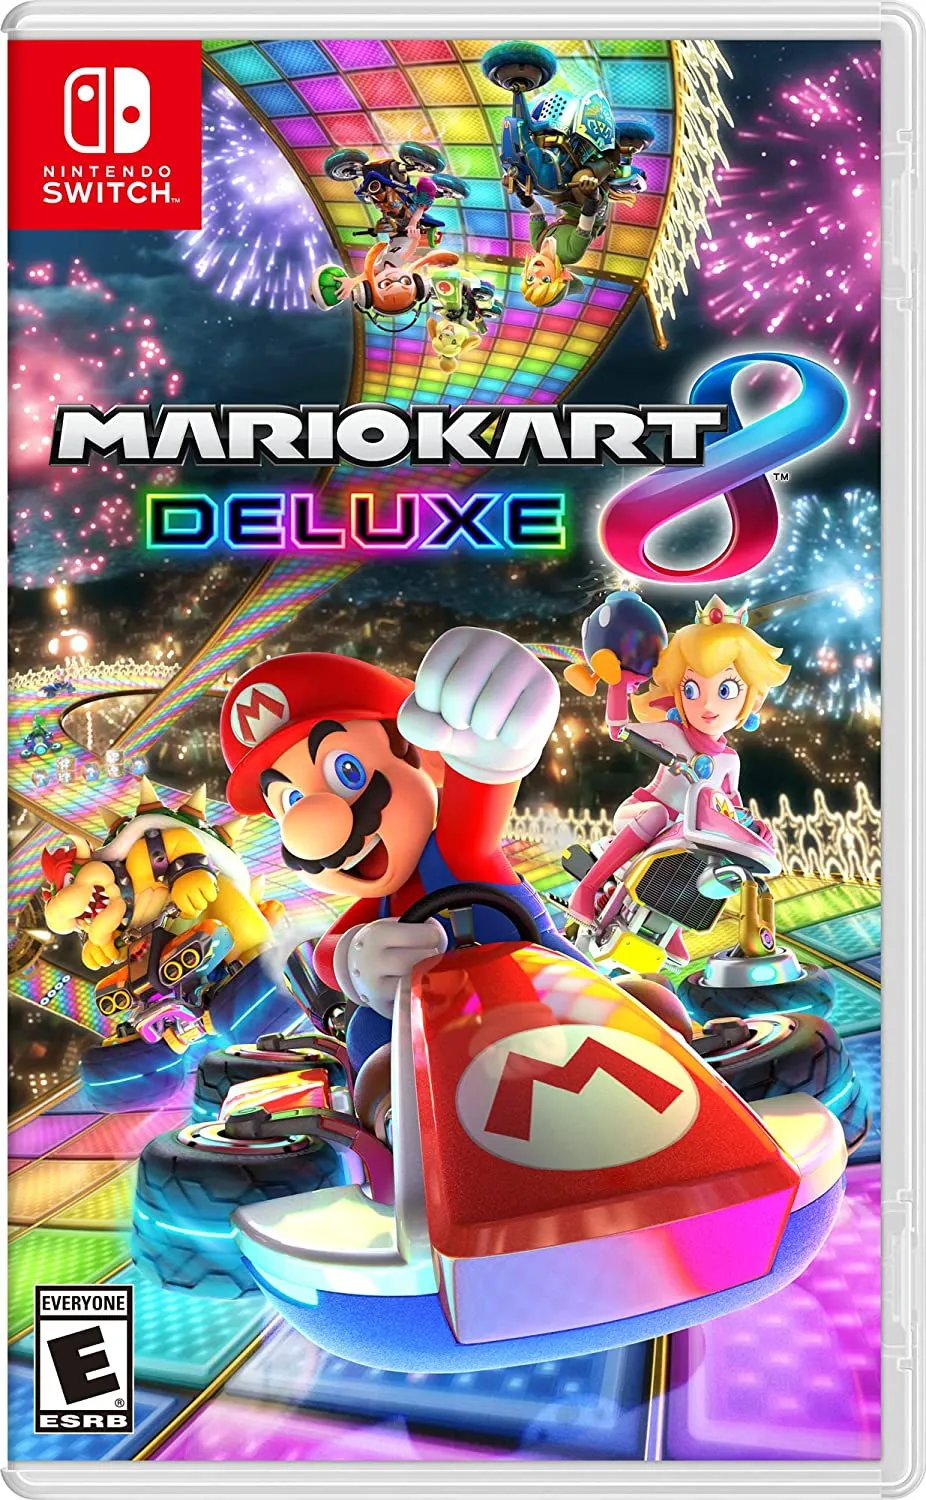 Mario Kart 8 Deluxe mängu kunstiteos.